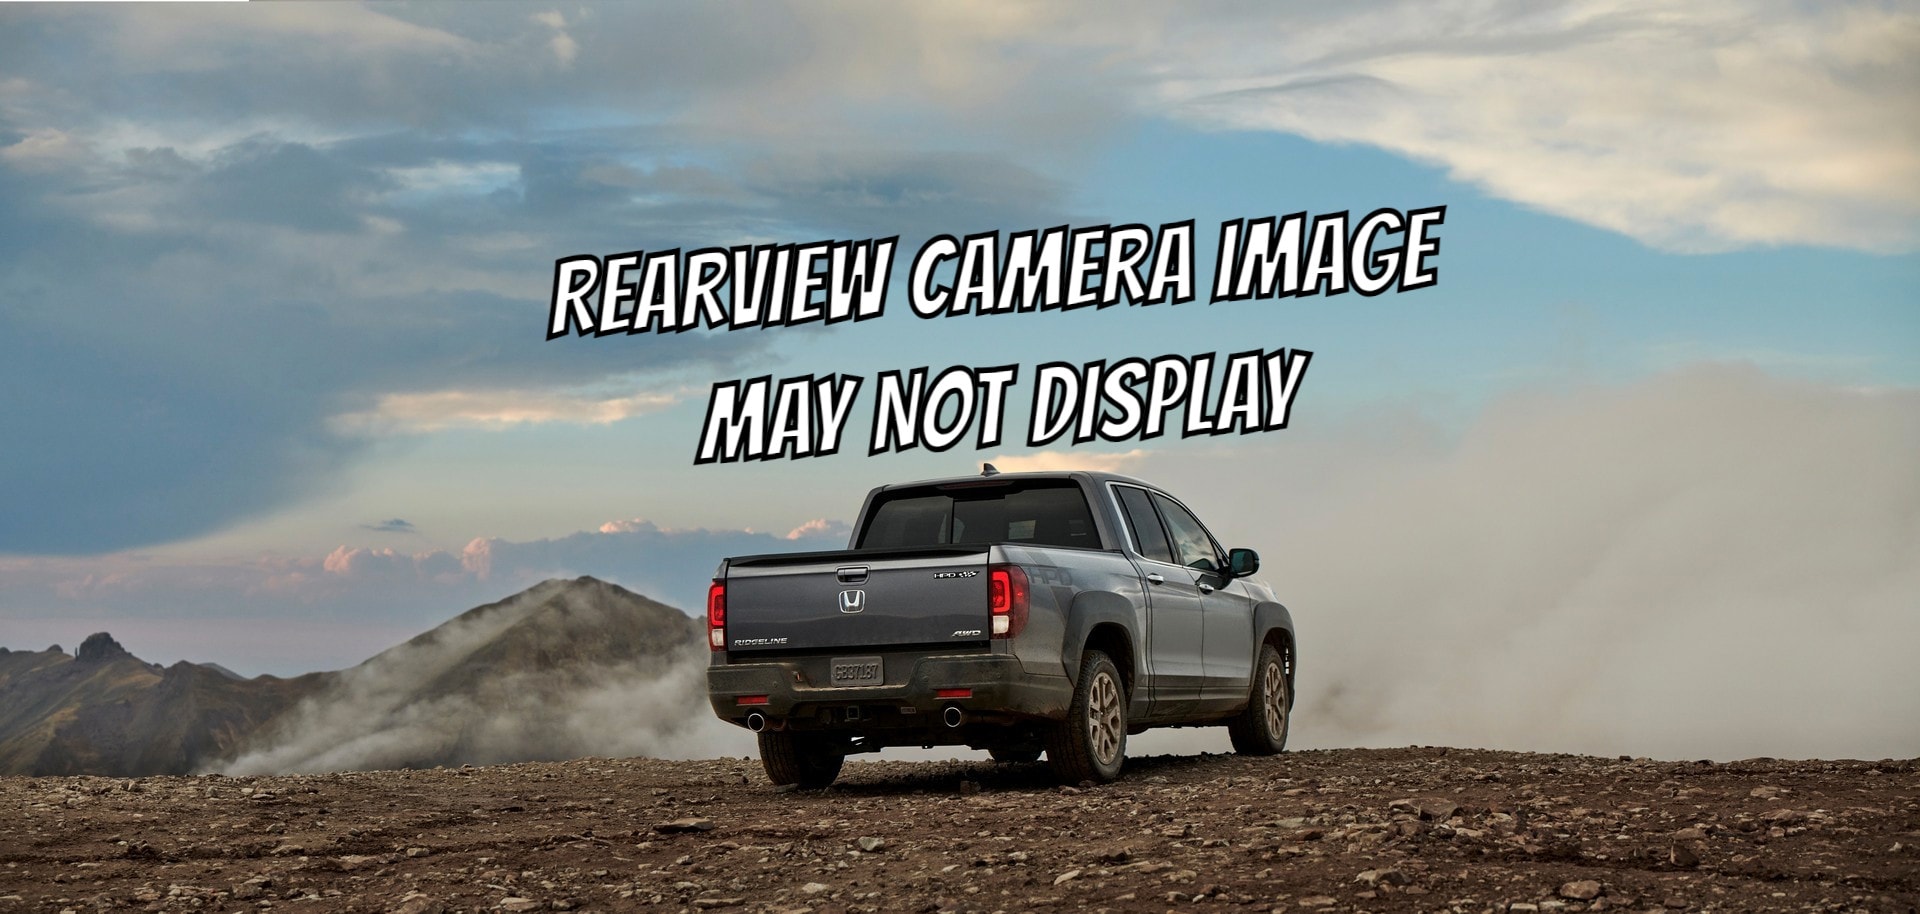   
																Honda Recalls 187,290 Ridgeline Trucks Over Rearview Camera Image That May Not Display 
															 